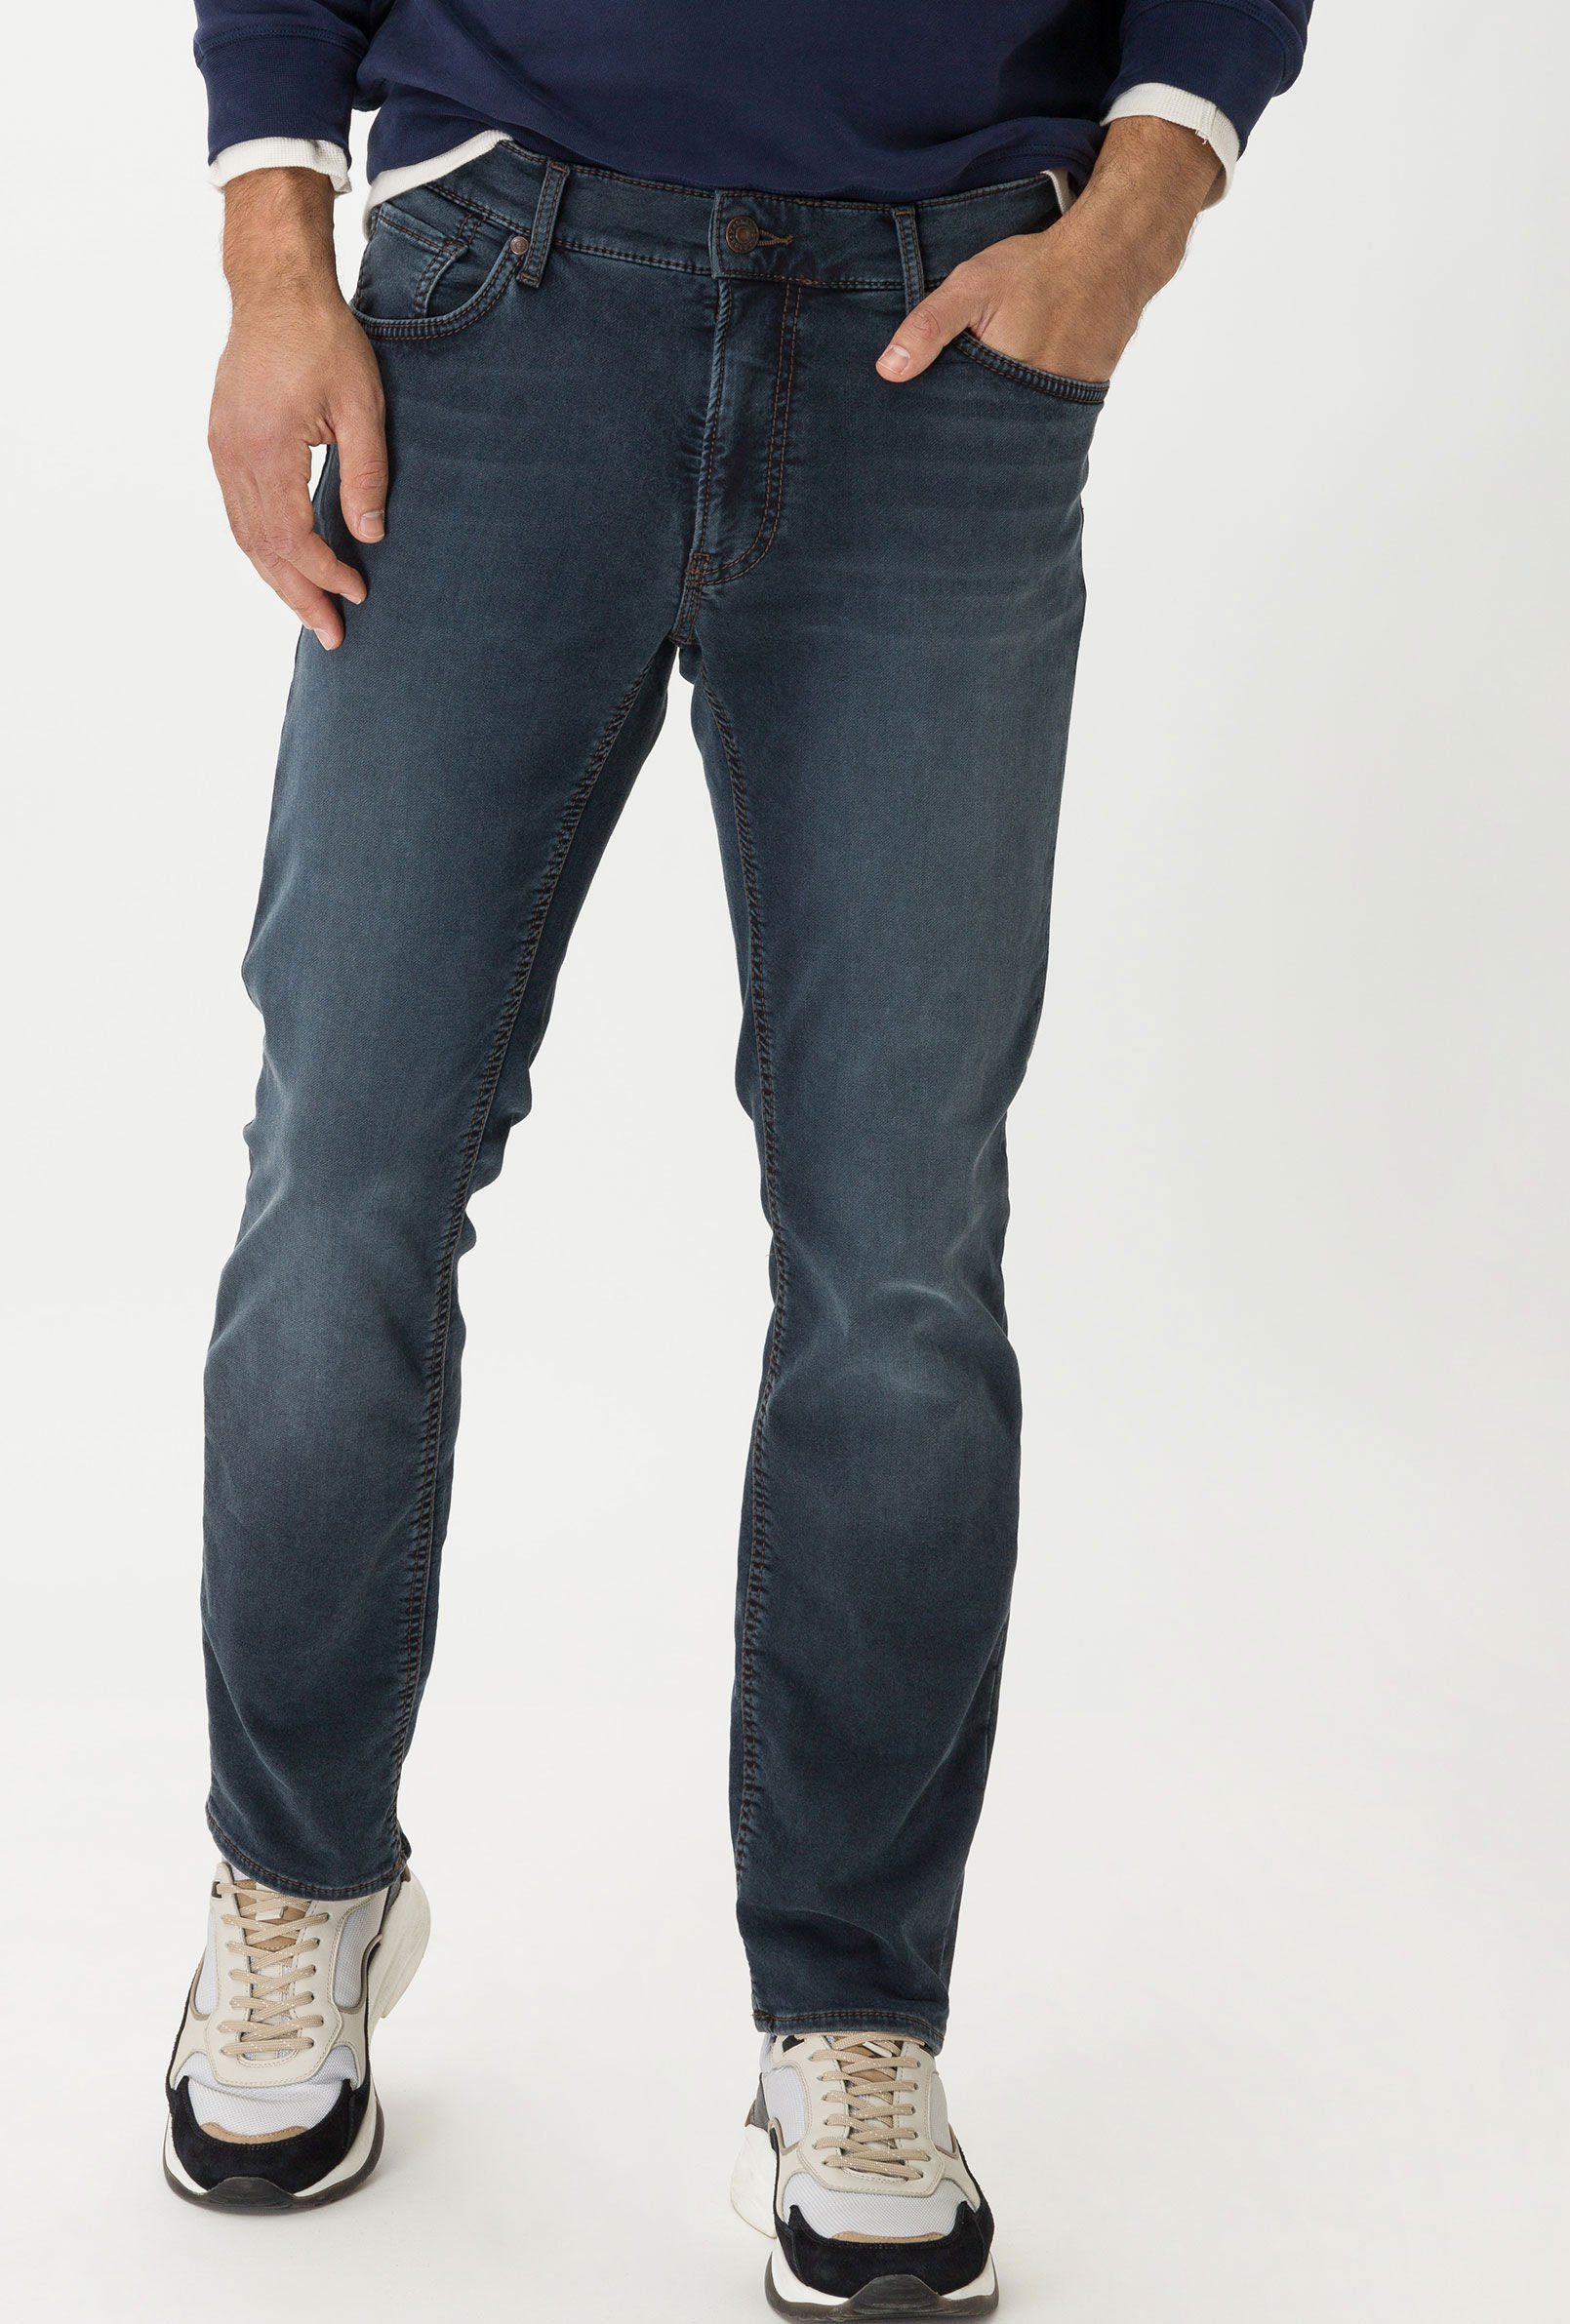 Brax 5-Pocket-Jeans Chuck Hybrid Flex Superstretch-Jeans regular blue used